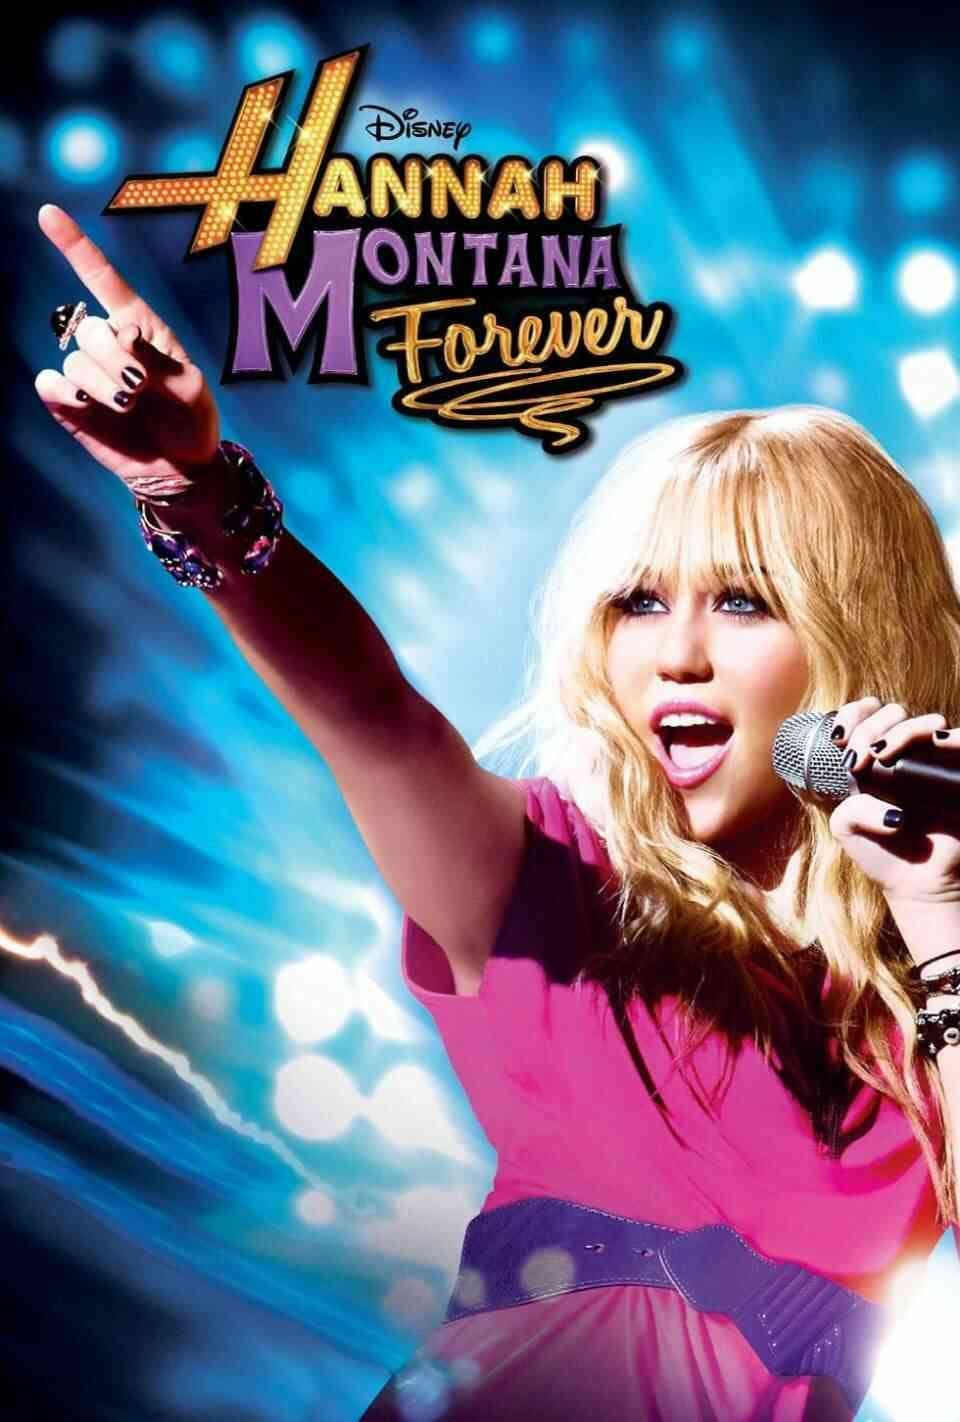 Read Hannah Montana screenplay (poster)